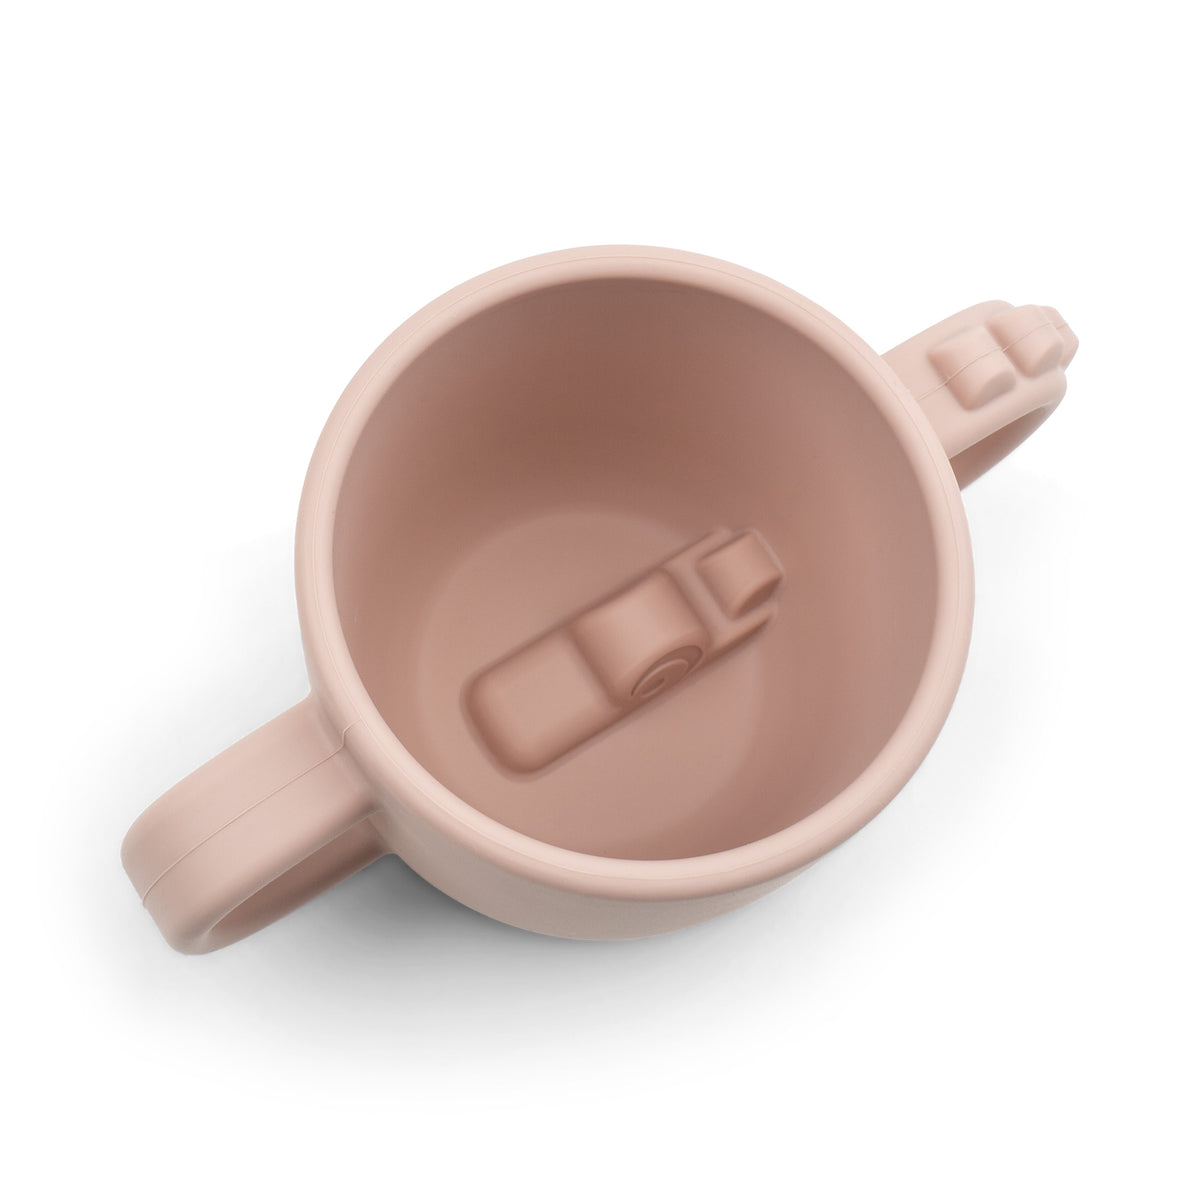 Peekaboo 2-handle cup - Croco - Powder - Detail